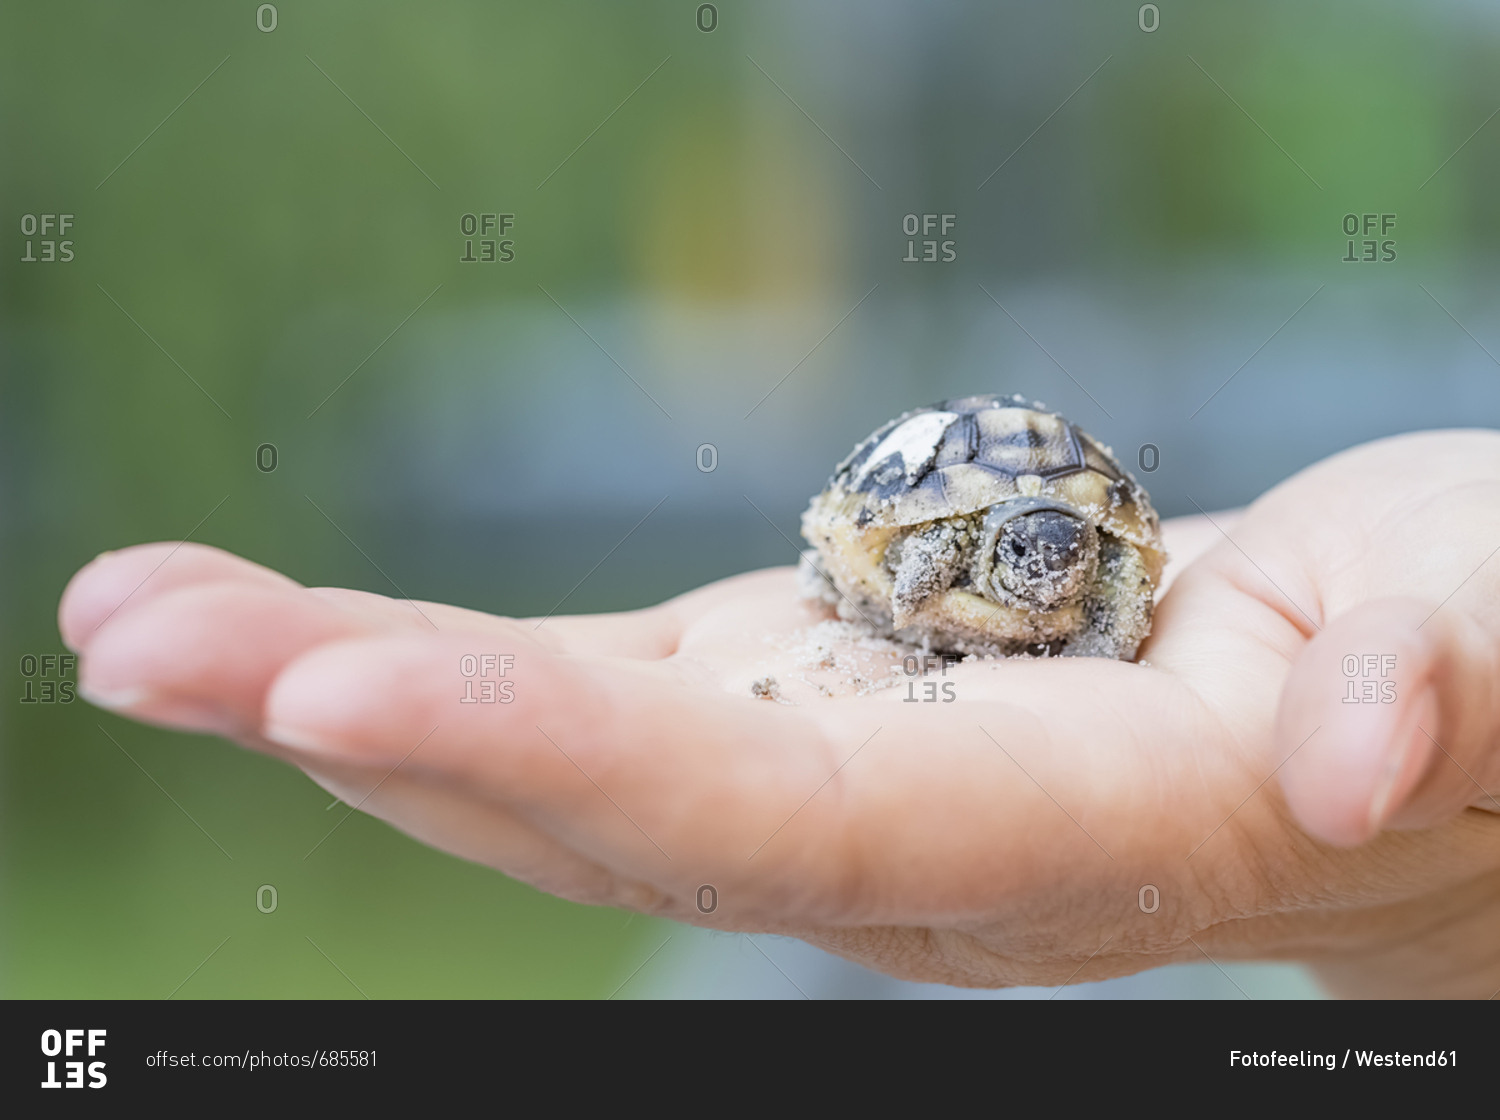 Hermann\'s tortoise- Testudo hermanni- freshly hatched